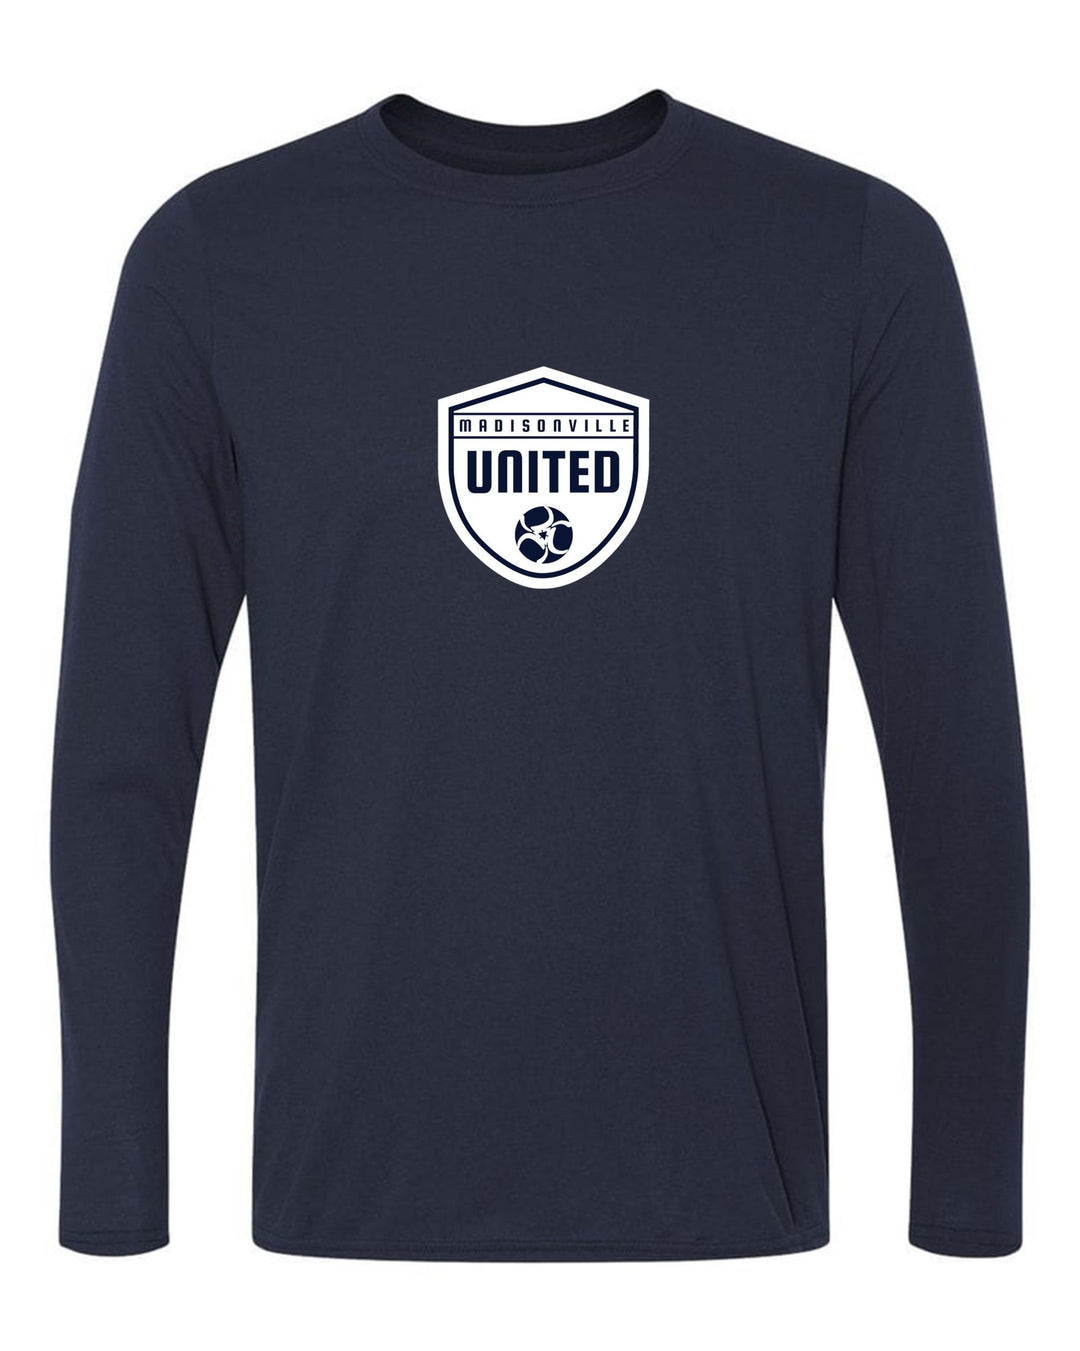 Madisonville United Long-Sleeve T-Shirt Madisonville United Spiritwear MENS EXTRA LARGE NAVY - Third Coast Soccer